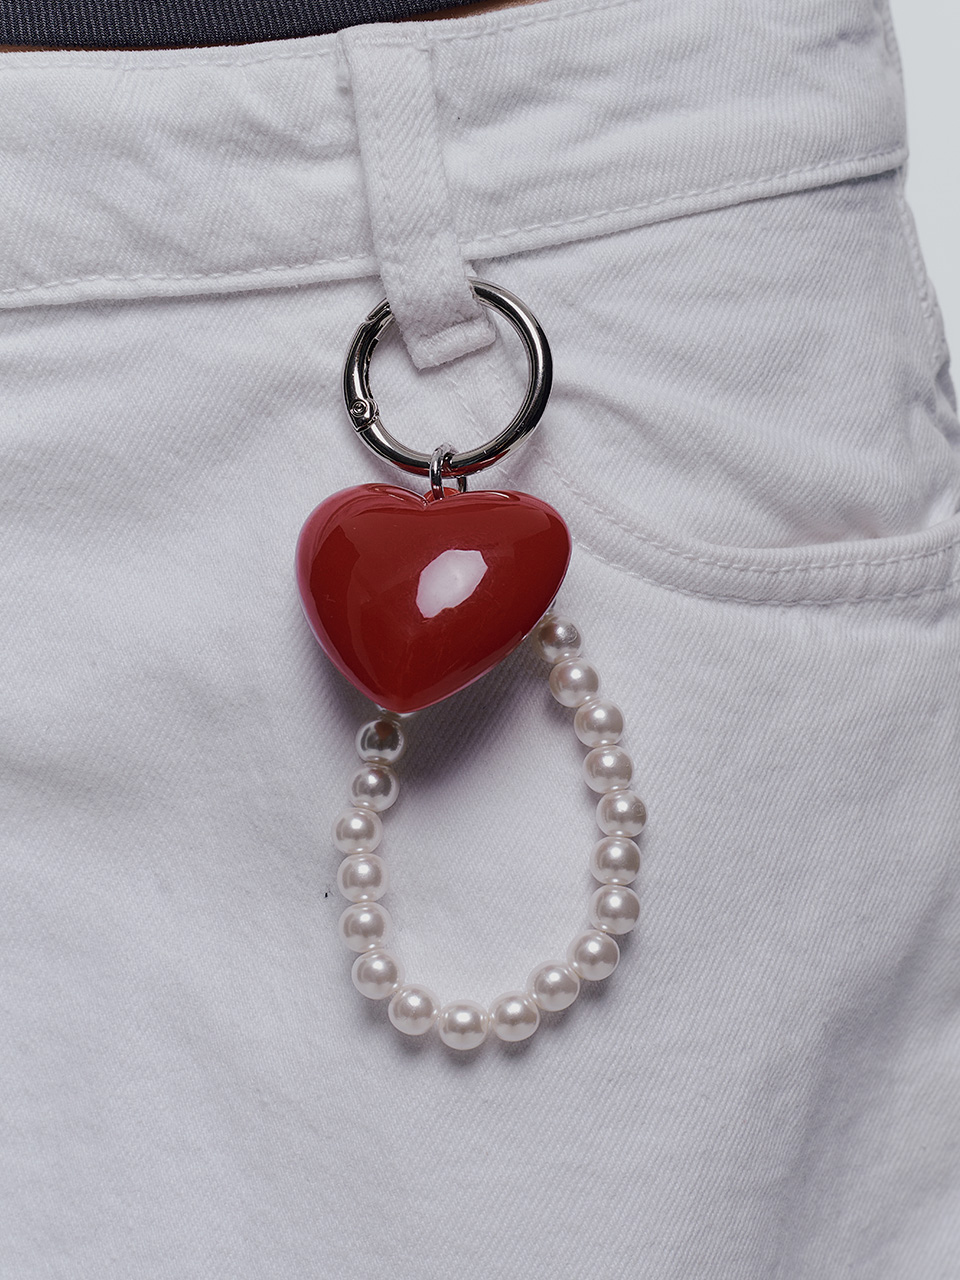 Red Heart Key Ring - DENU